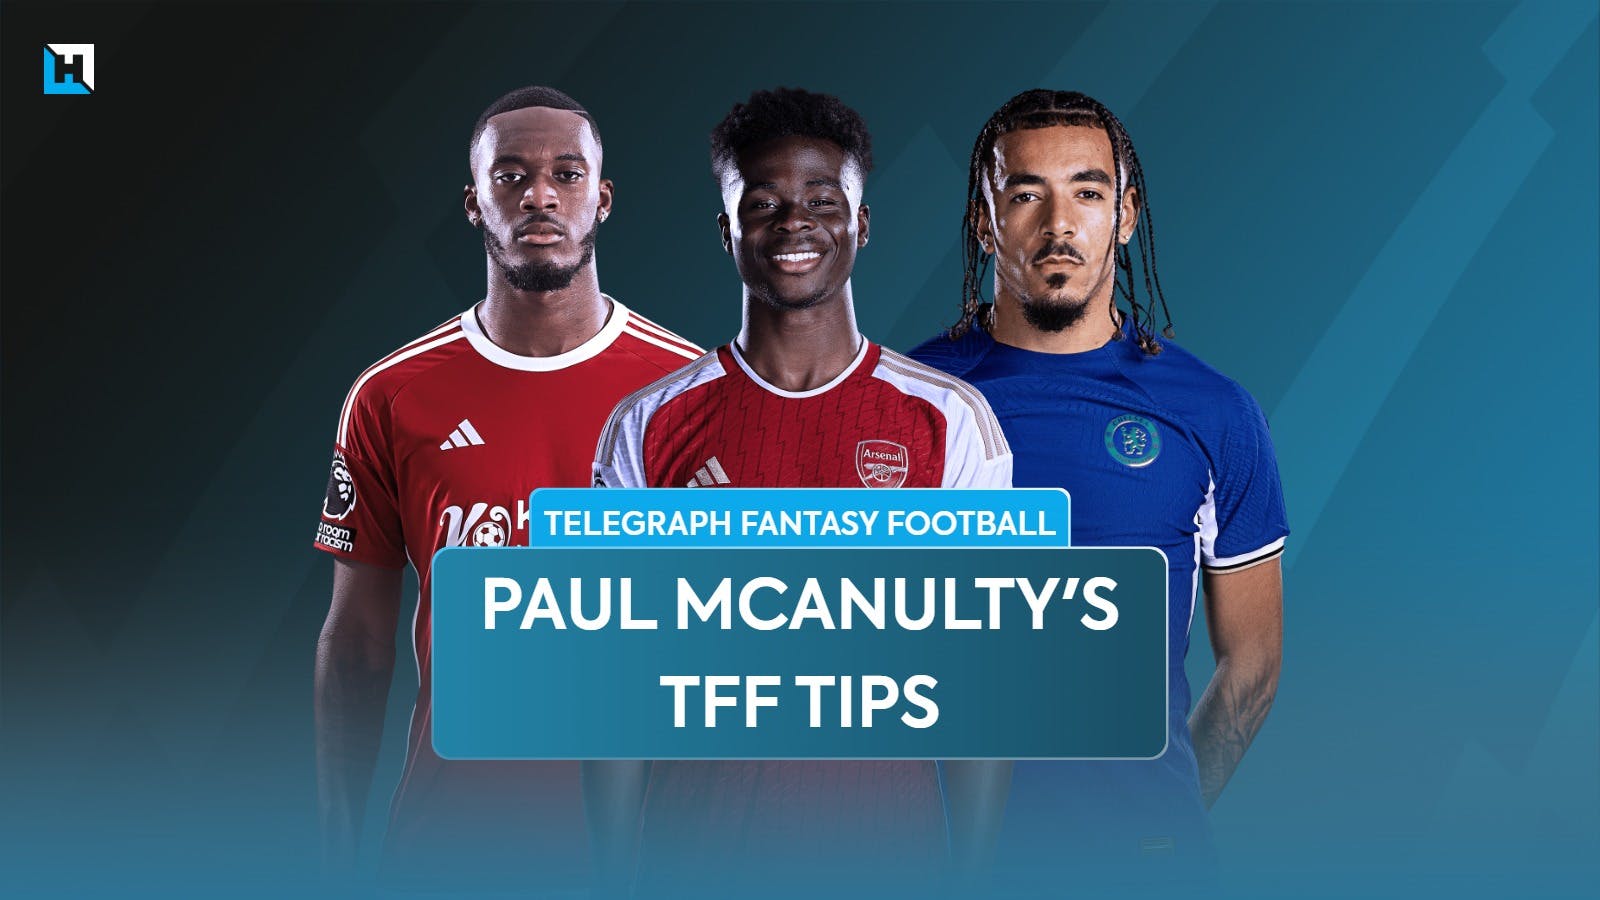 Paul McAnulty’s Telegraph Fantasy Football tips